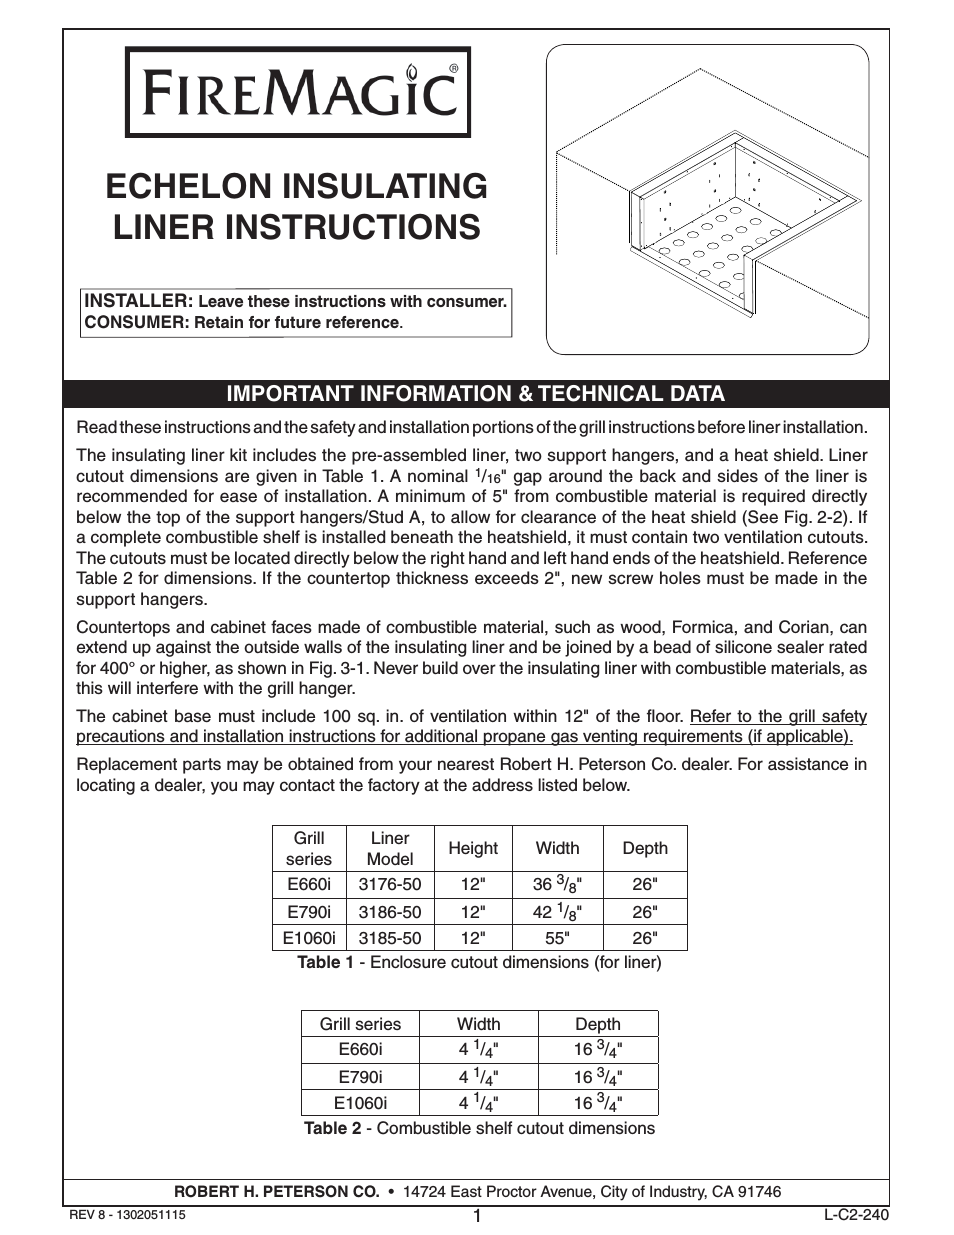 Echelon Insulating Liner